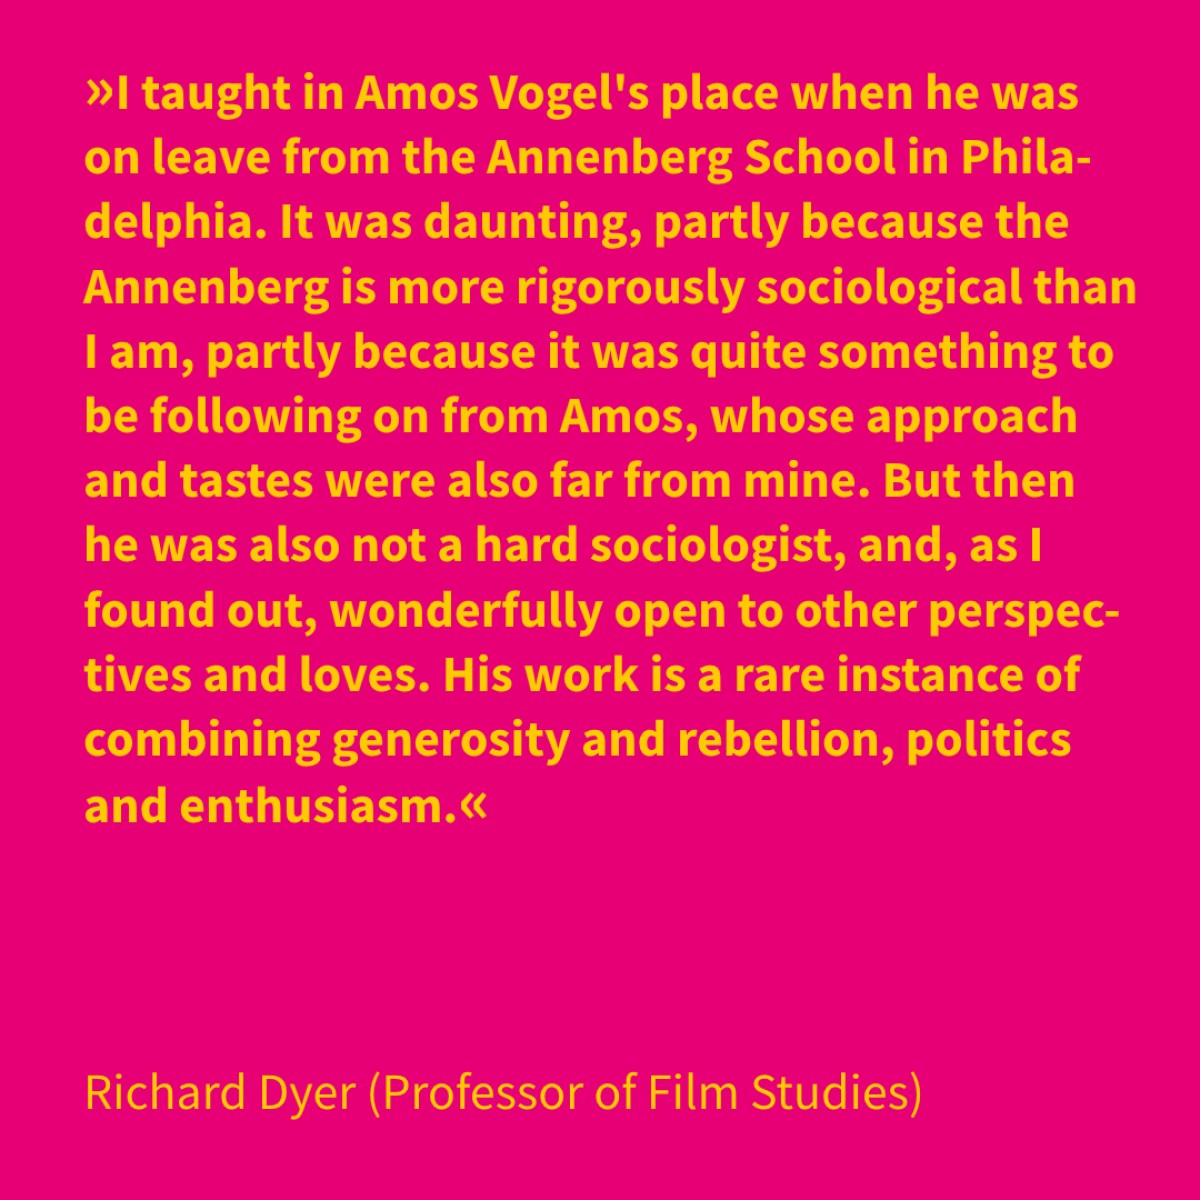 Richard Dyer (Professor of Film Studies)